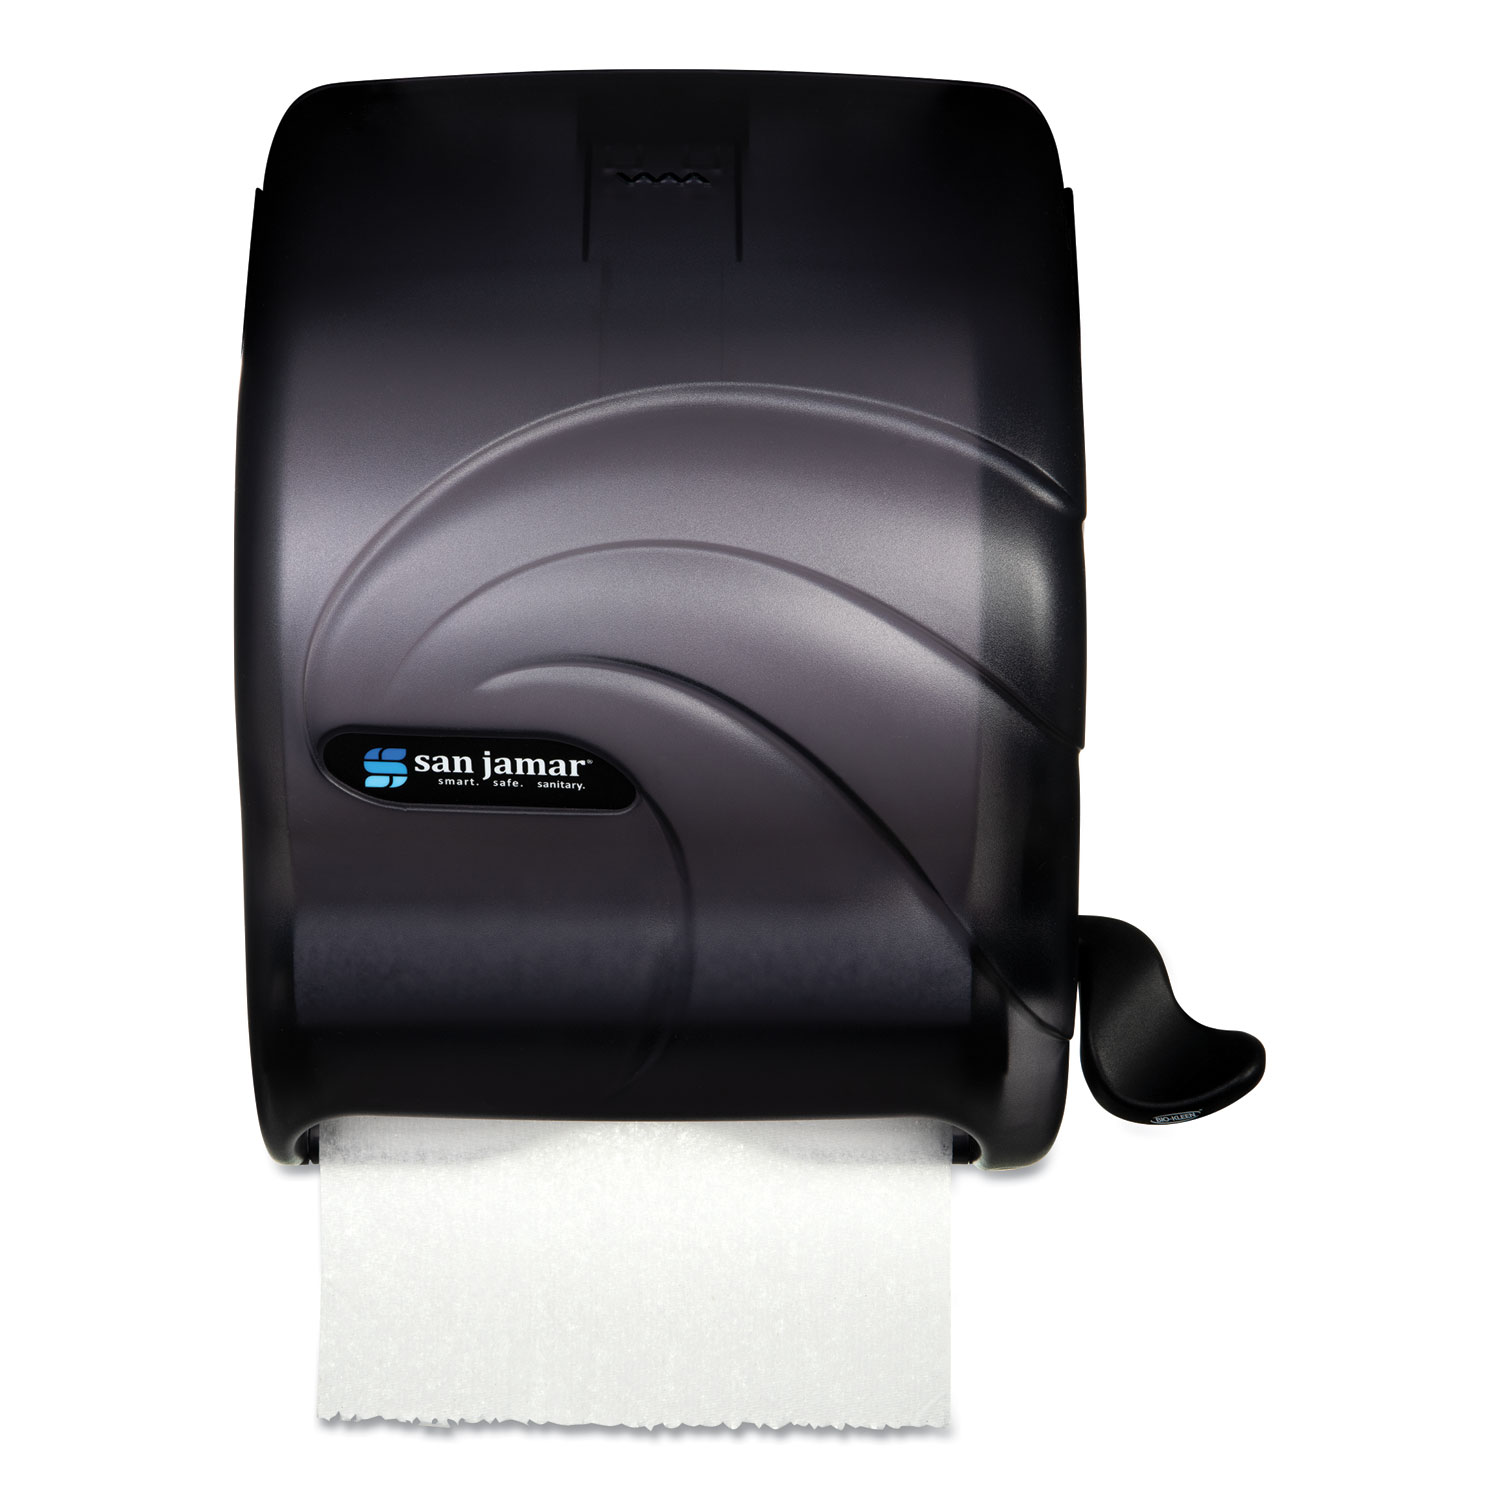 San Jamar Element Lever Roll Towel Dispenser, Oceans, 12.5 X 8.5 X 12.75, Black Pearl